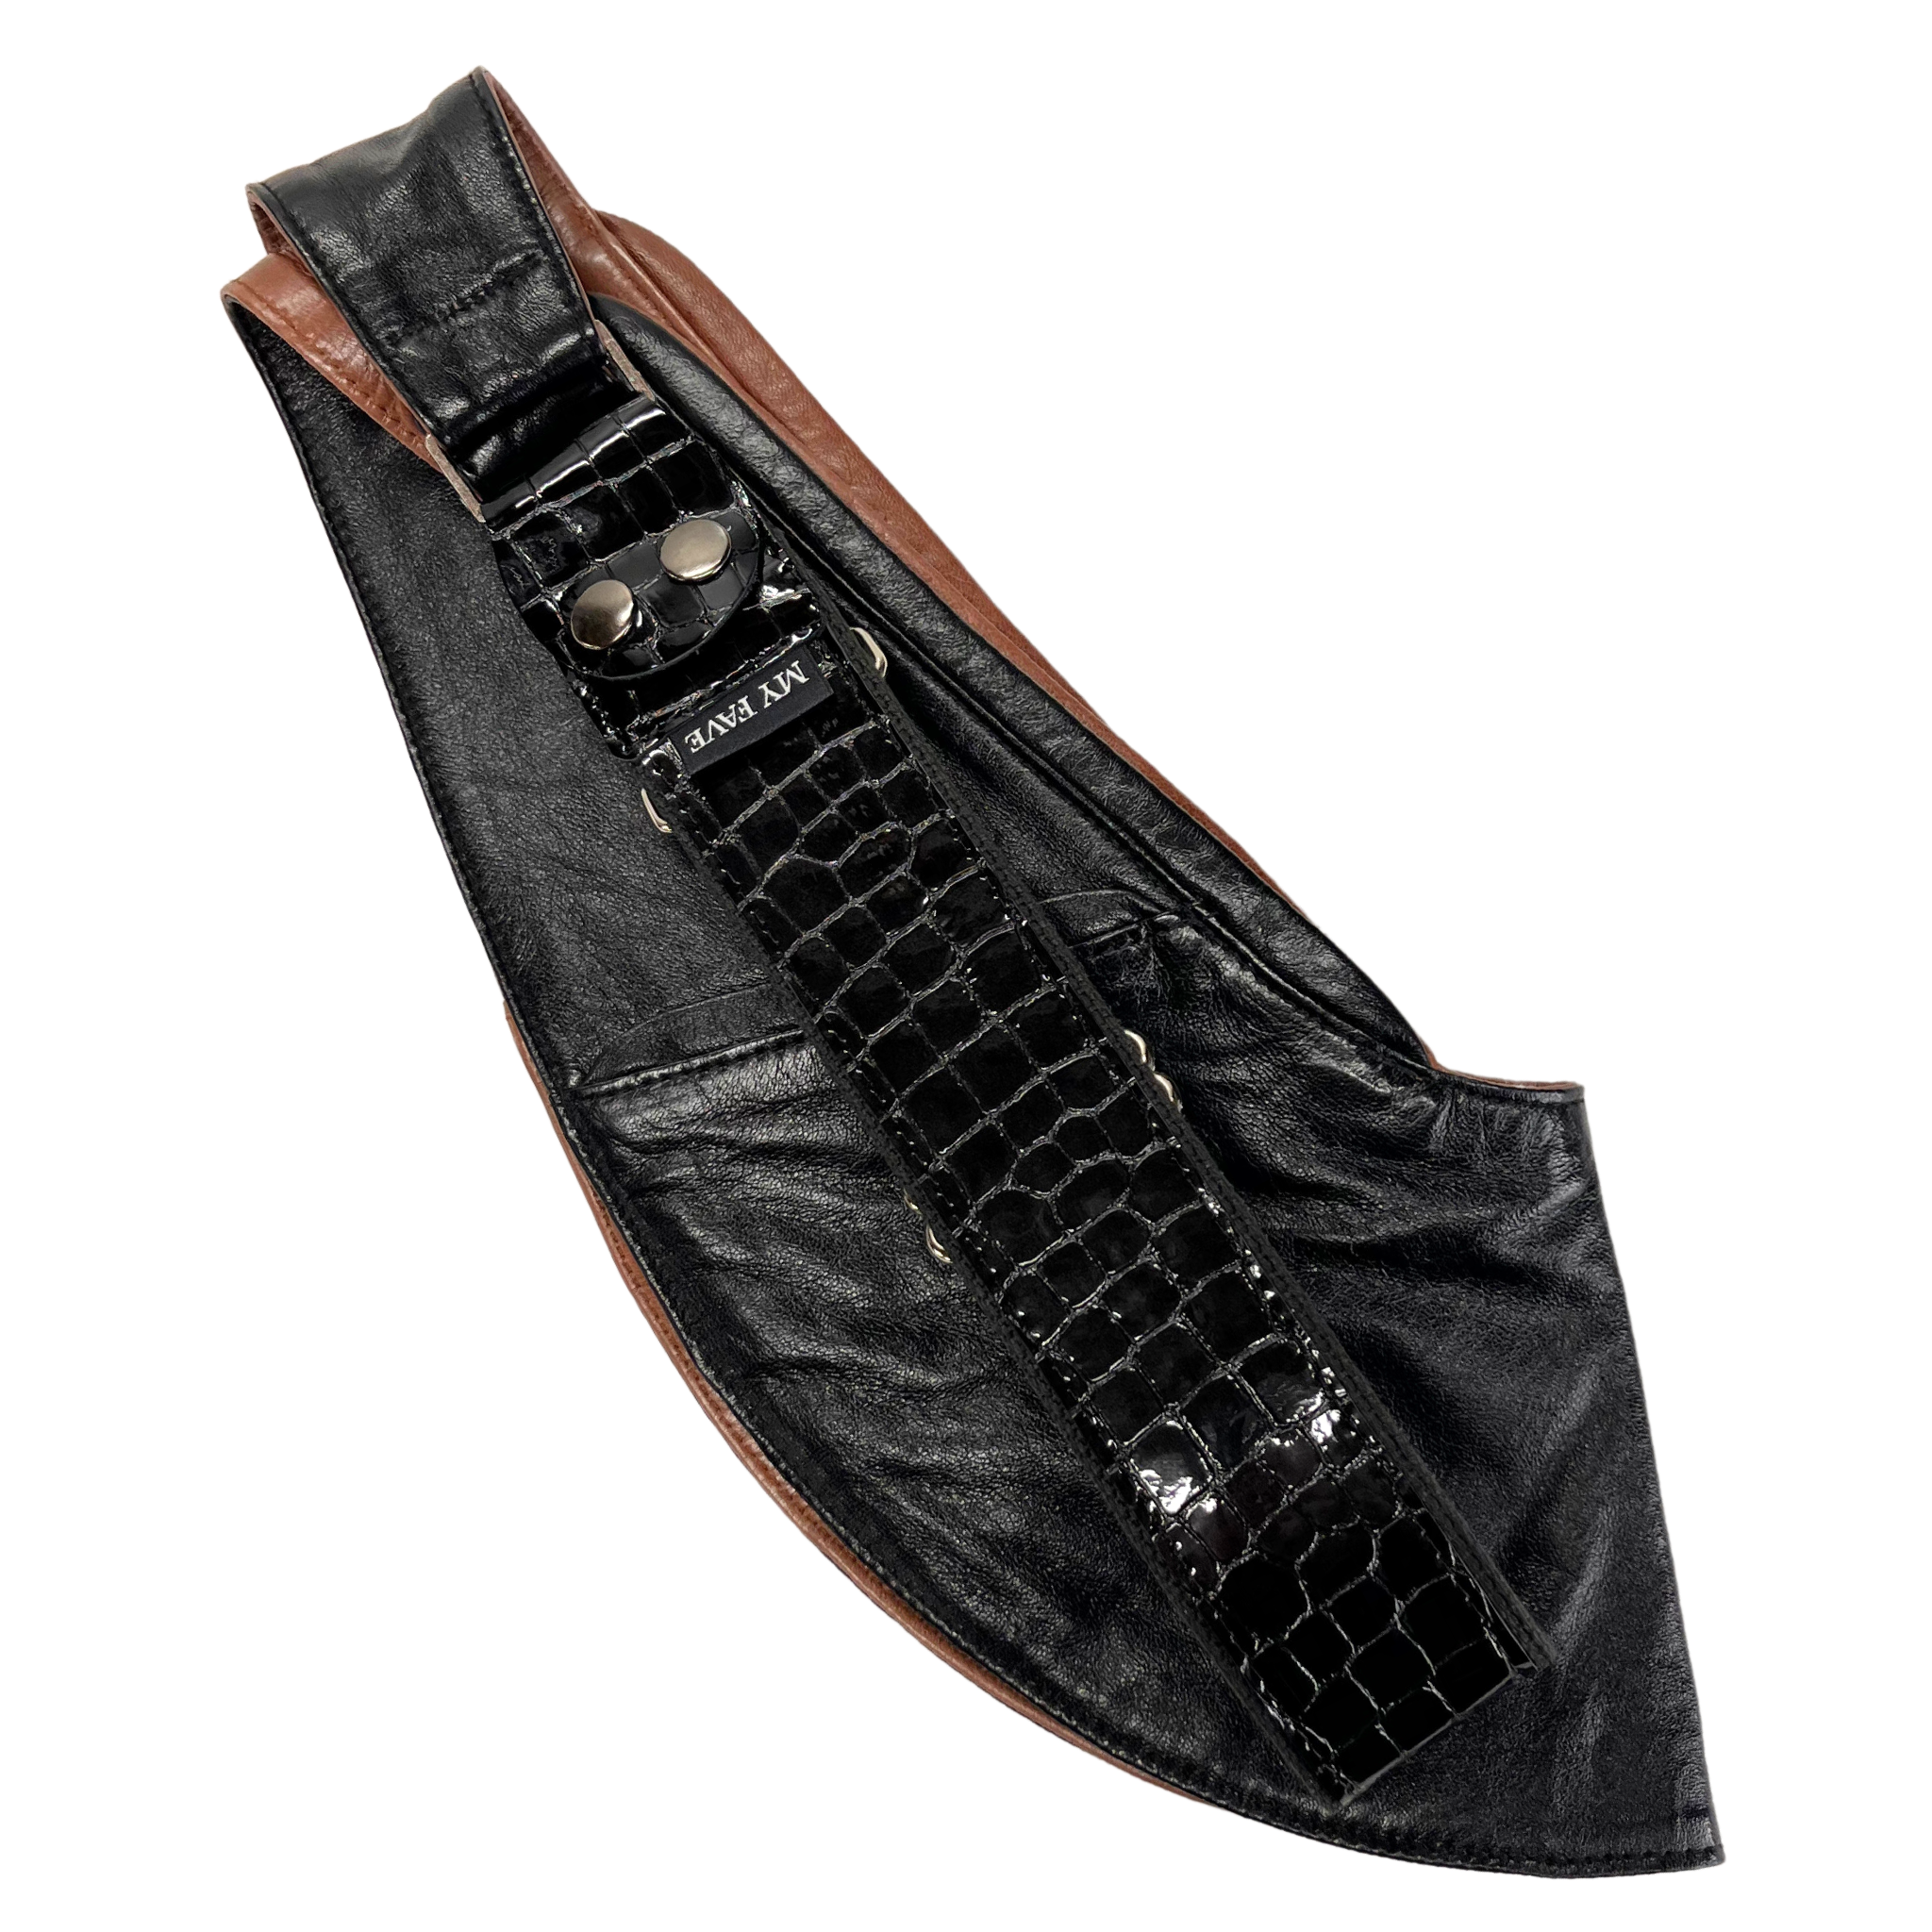 Sass Bag & Purse Strap - Black Patent Leather